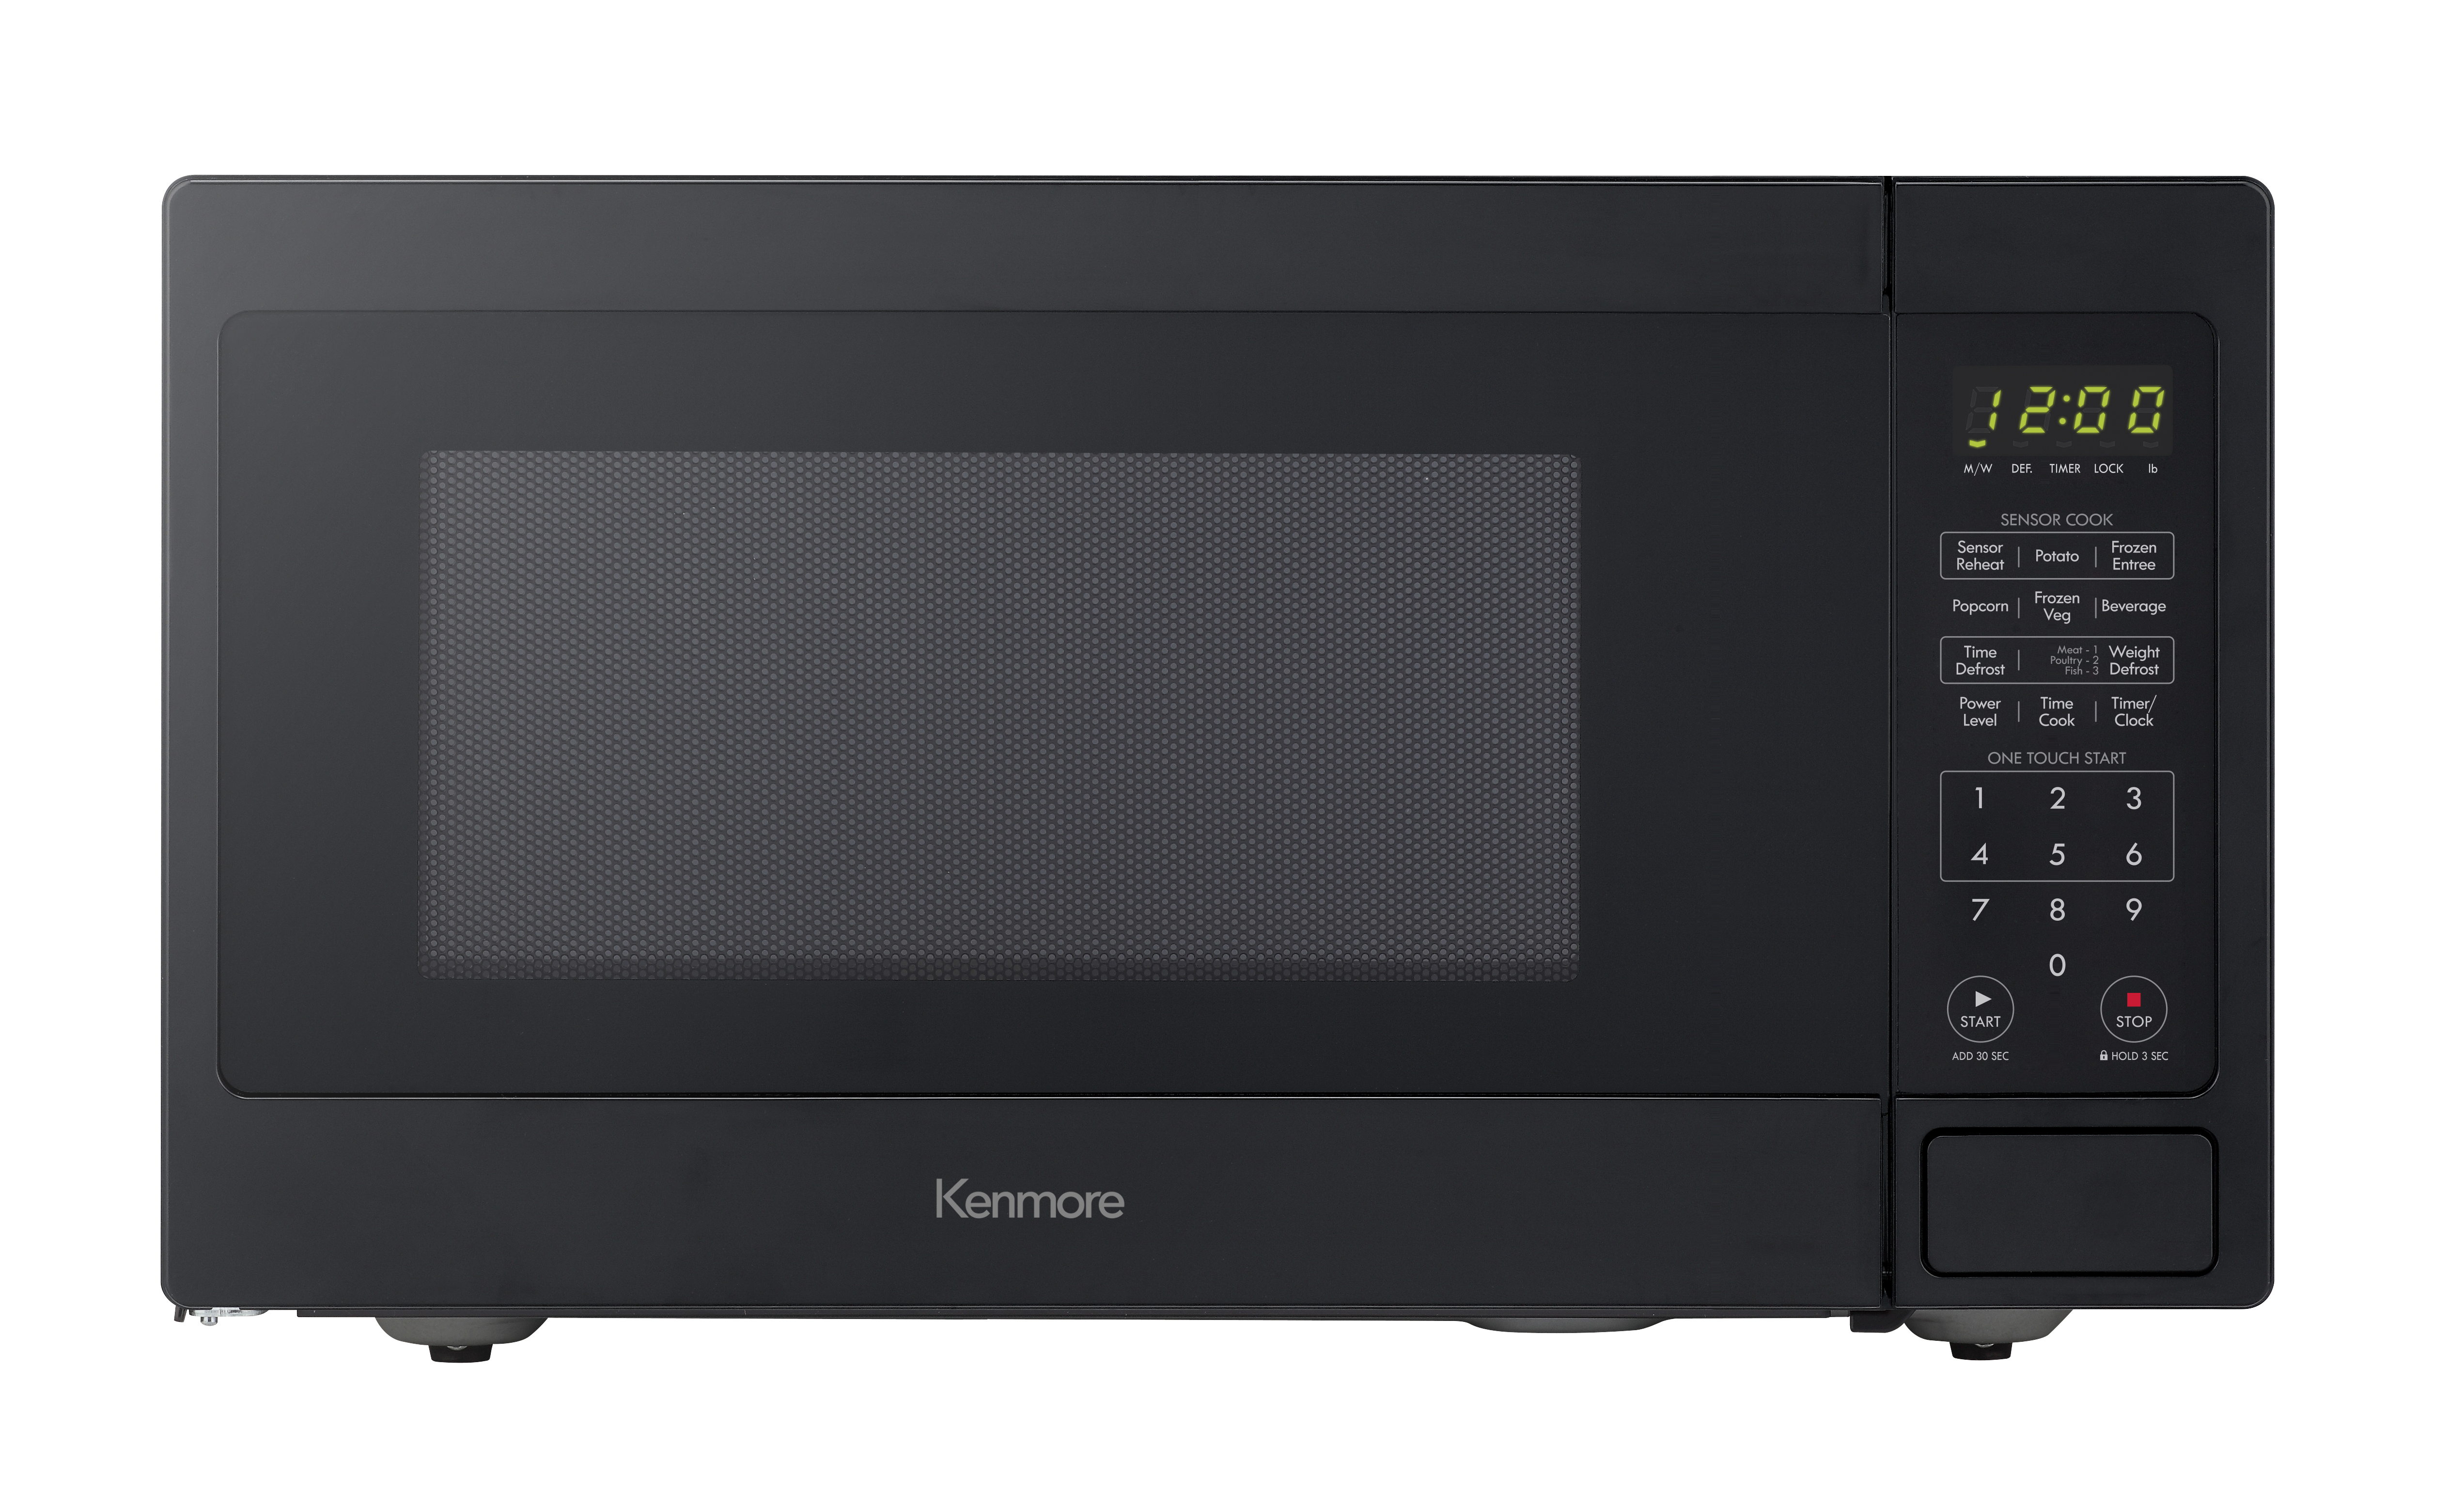 Kenmore 71319 1.3 cu. ft. Countertop Microwave Oven - Black